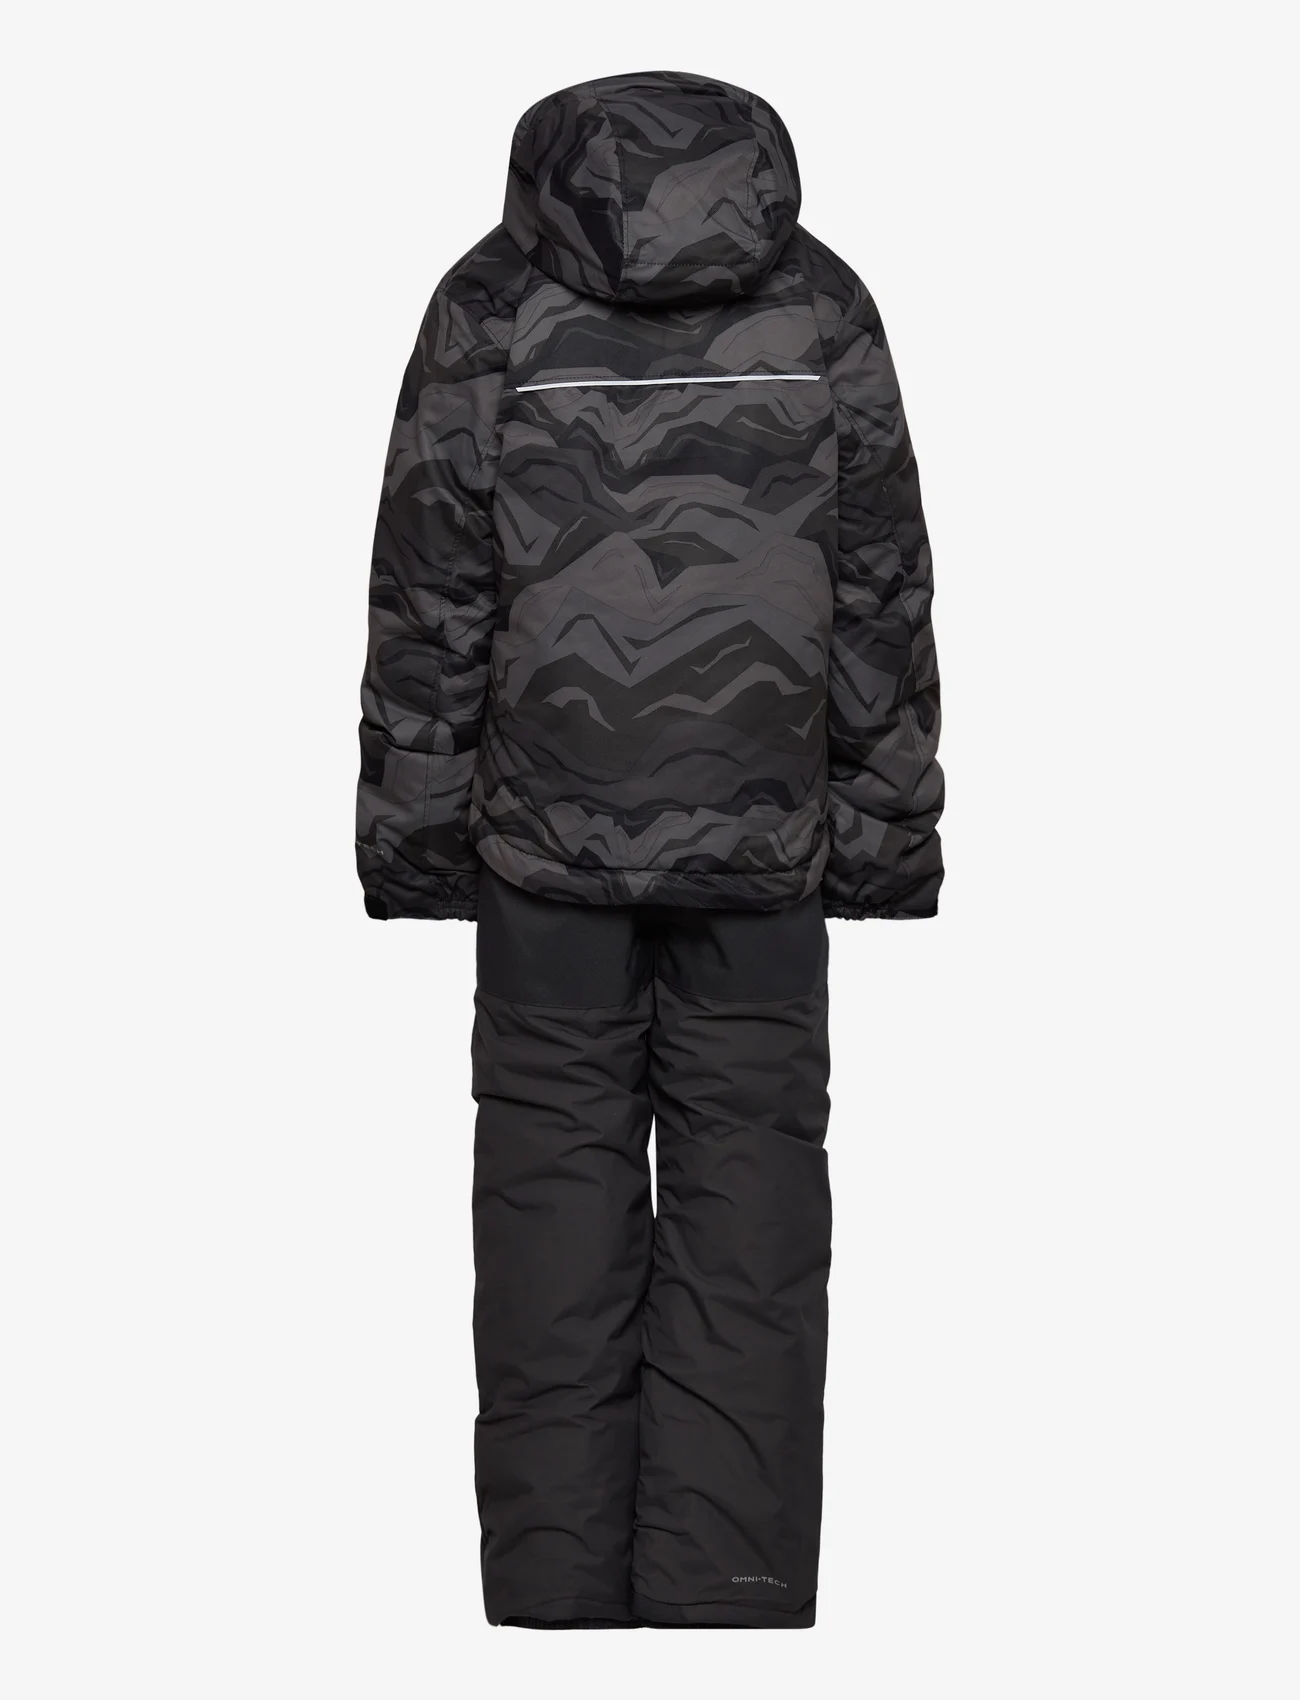 Columbia Sportswear - Buga Set - sniega kombinezons - black tectonic - 1